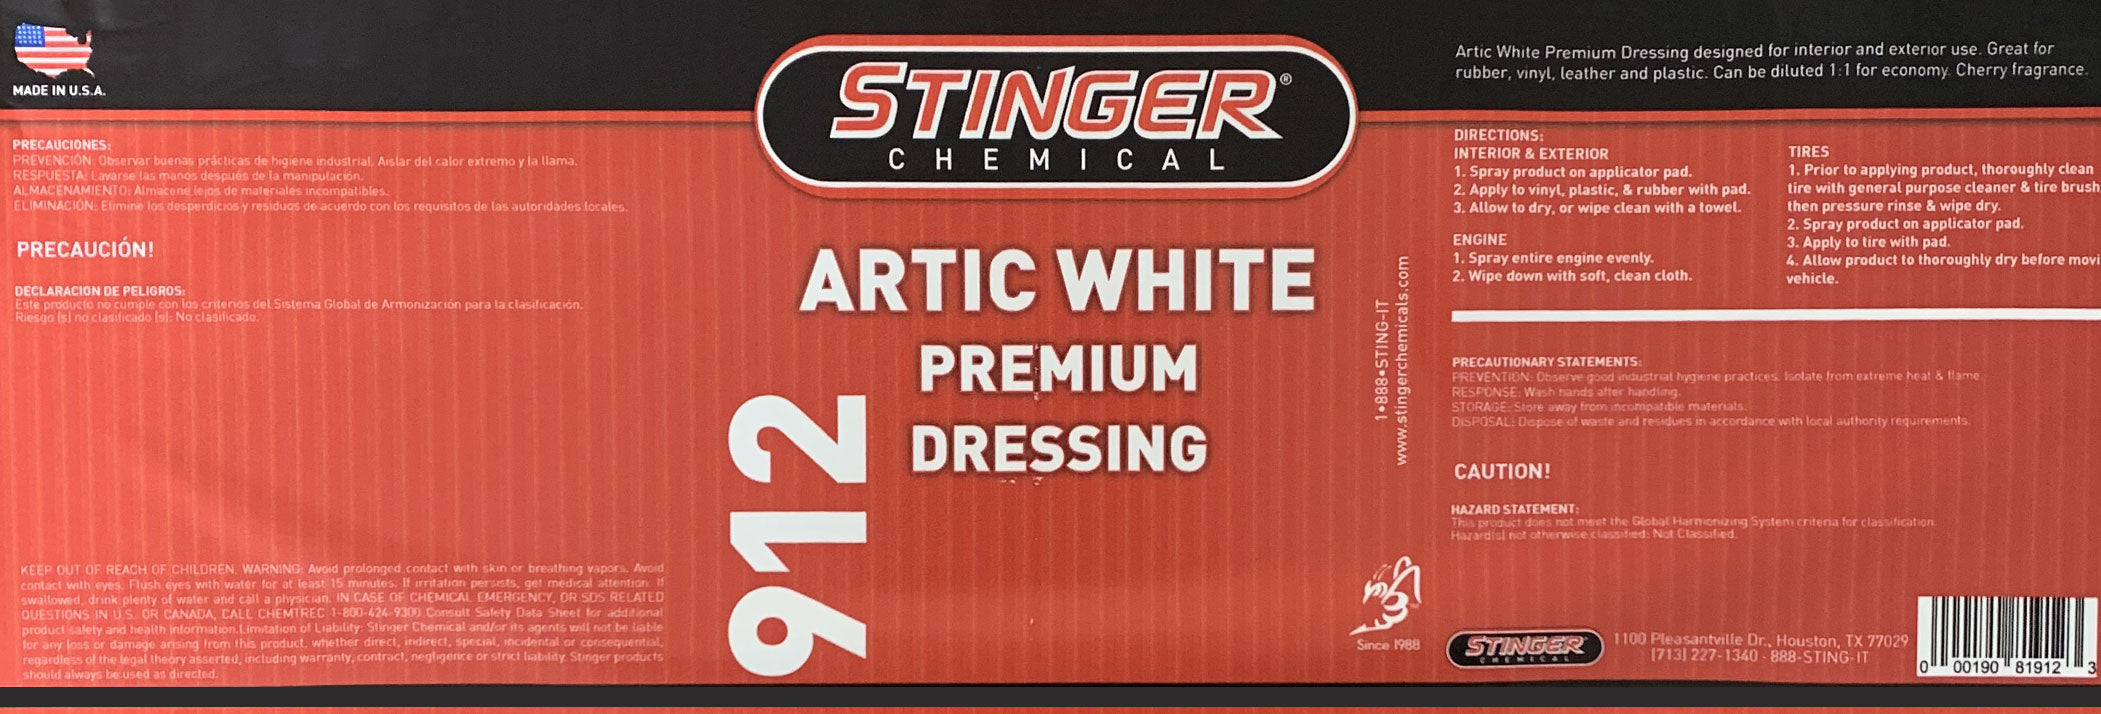 stinger-912-label